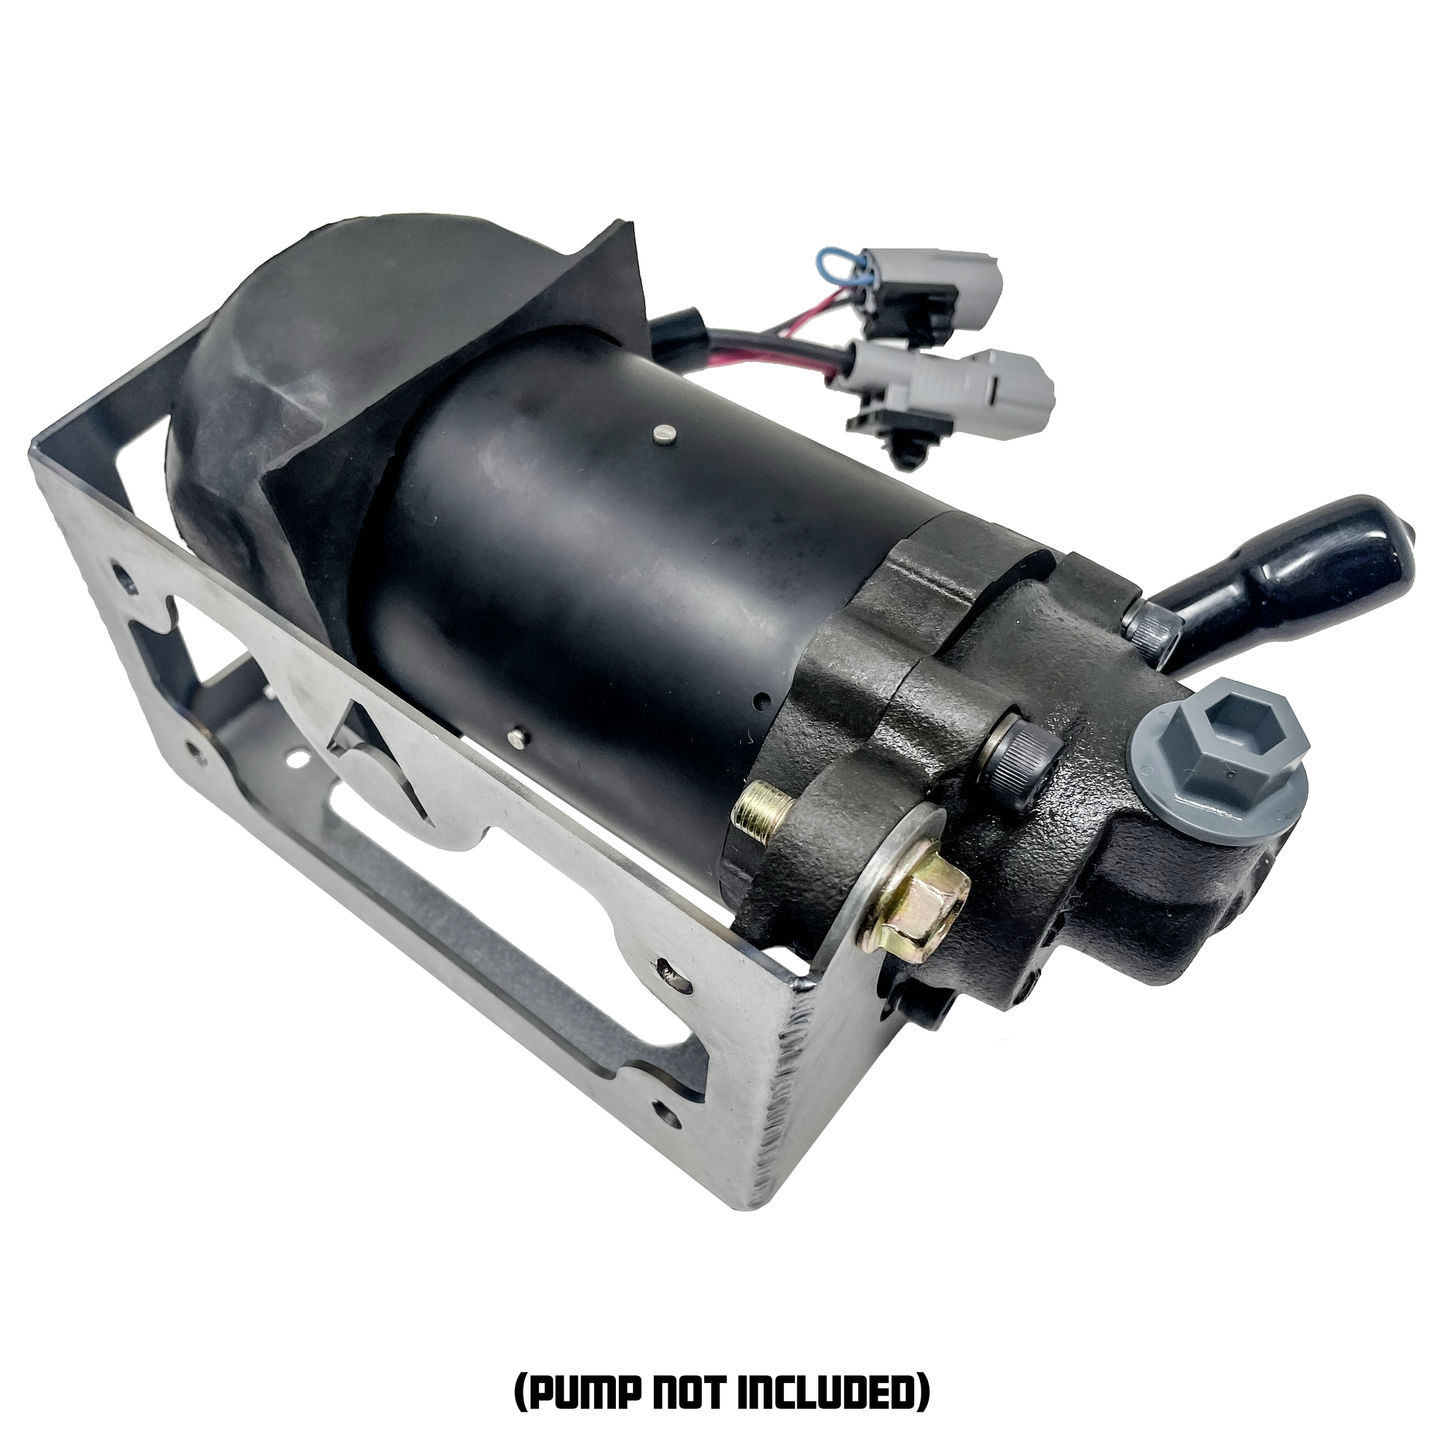 Alaria - Electric Power Steering Pump Bracket (Suits SW20 Toyota MR2 Pump)